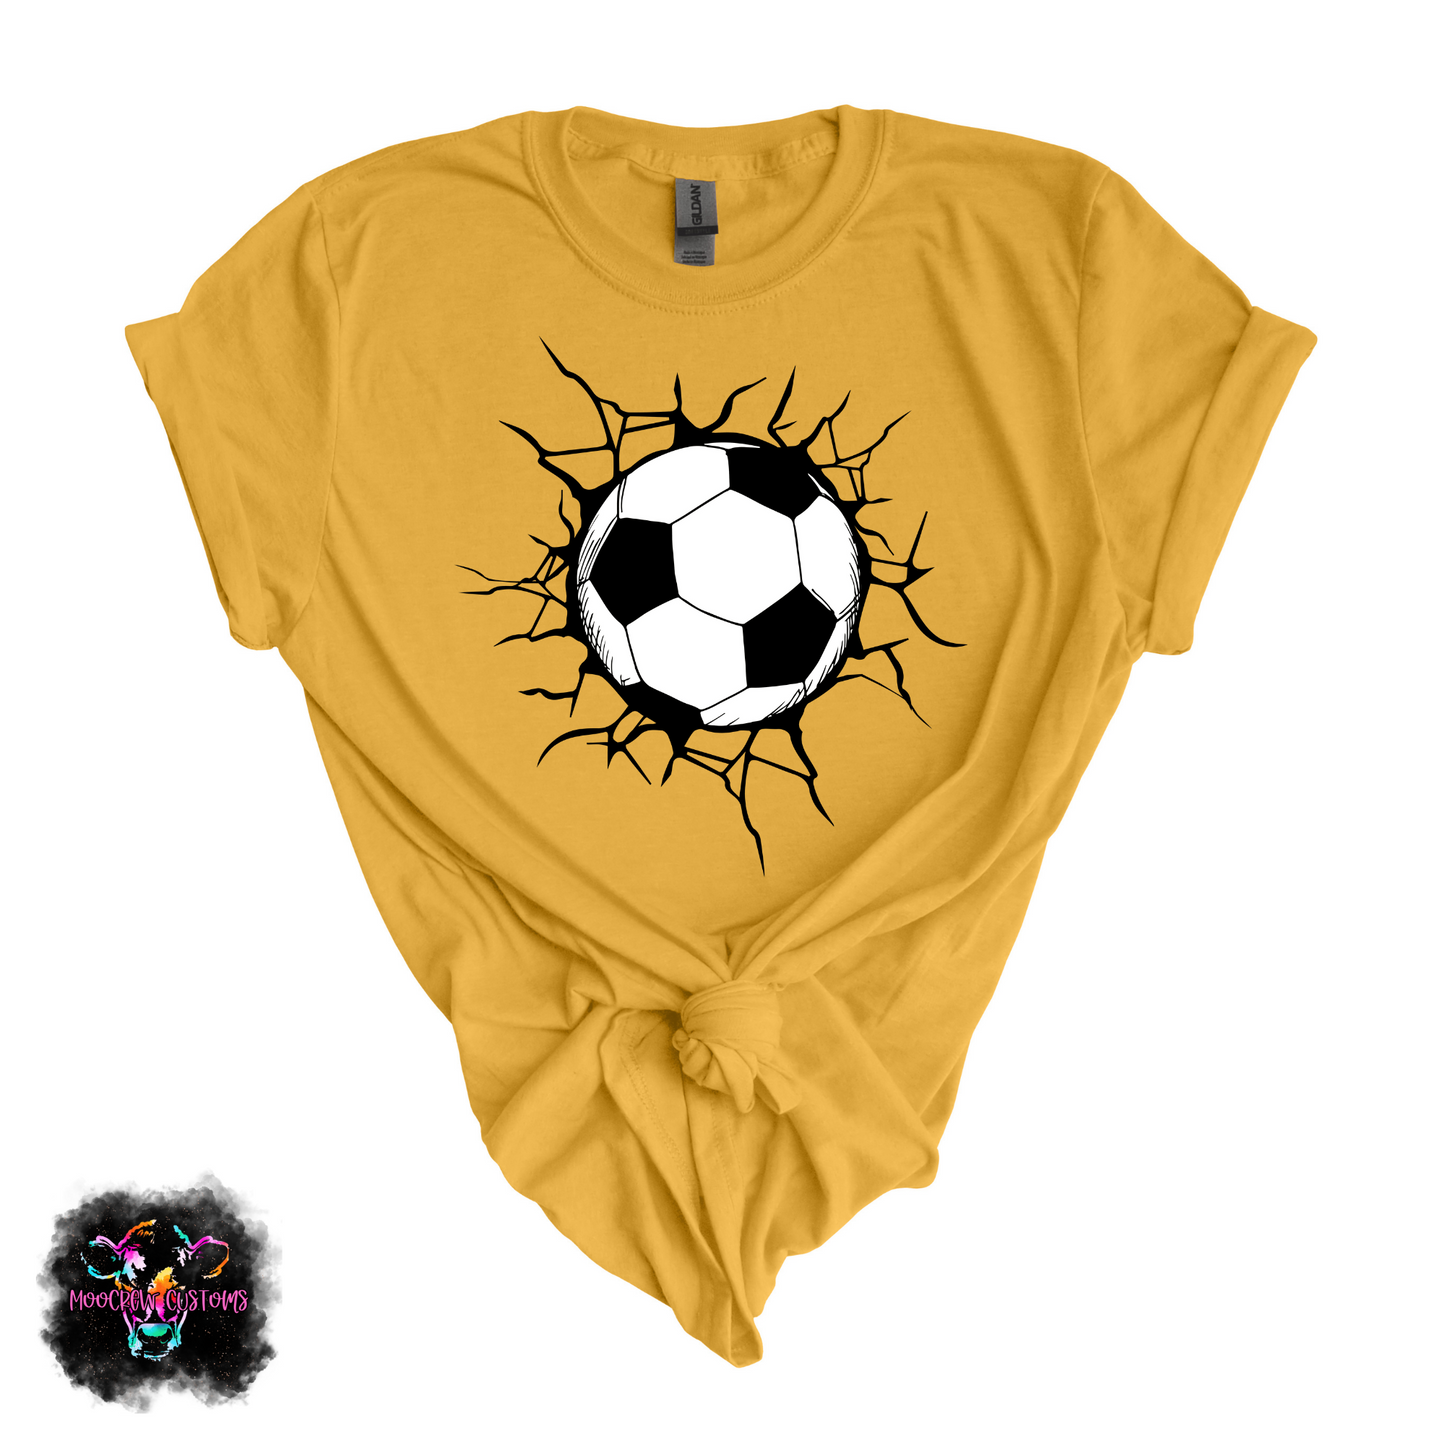 Soccer Break Through Tshirt